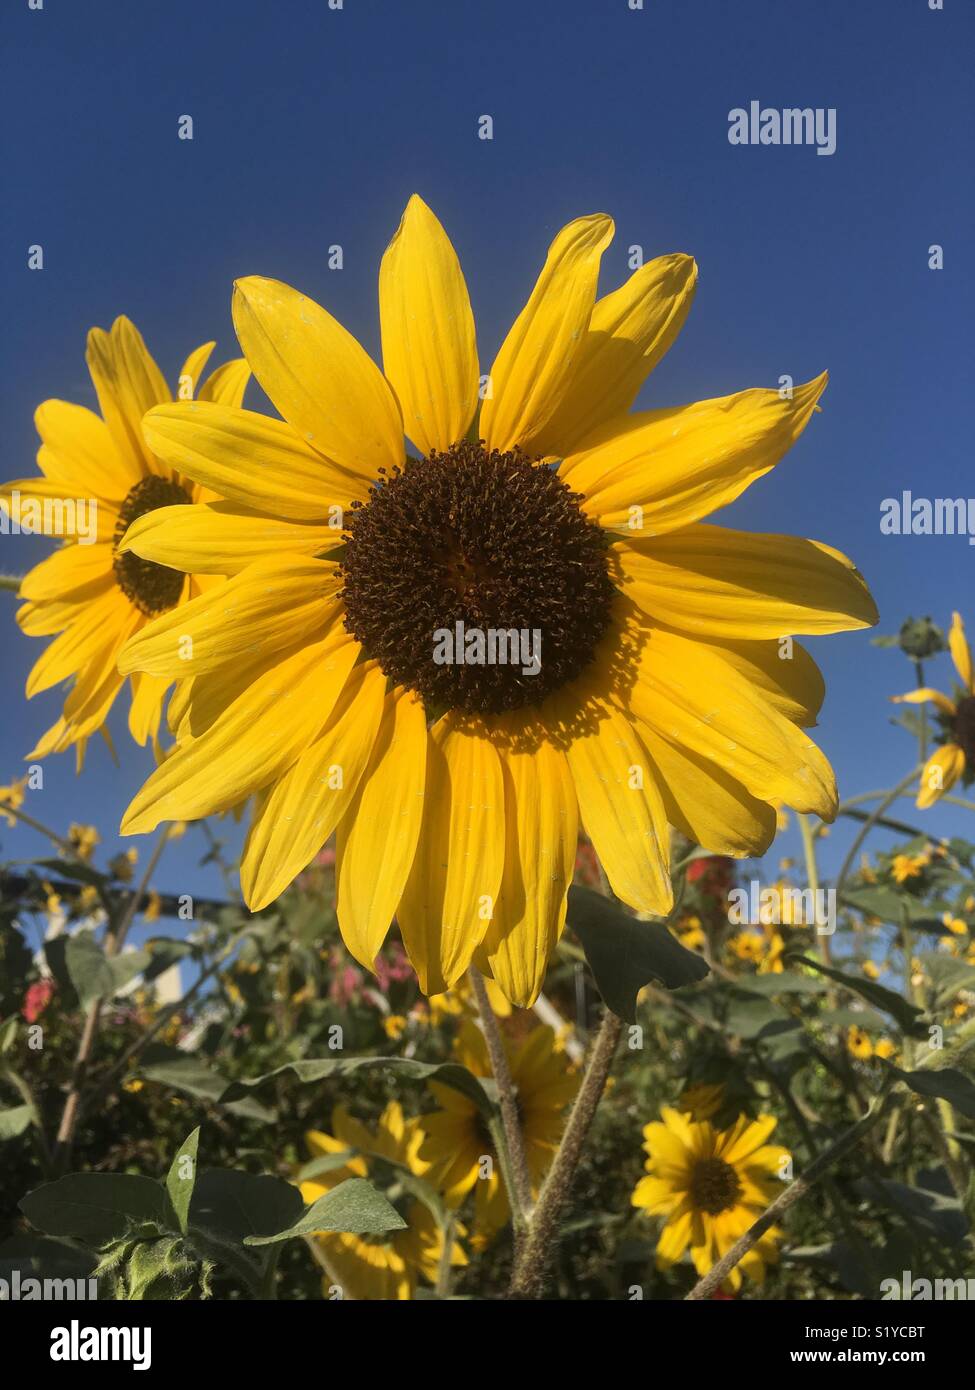 Sunflower looks like glowing sun Stock Photo